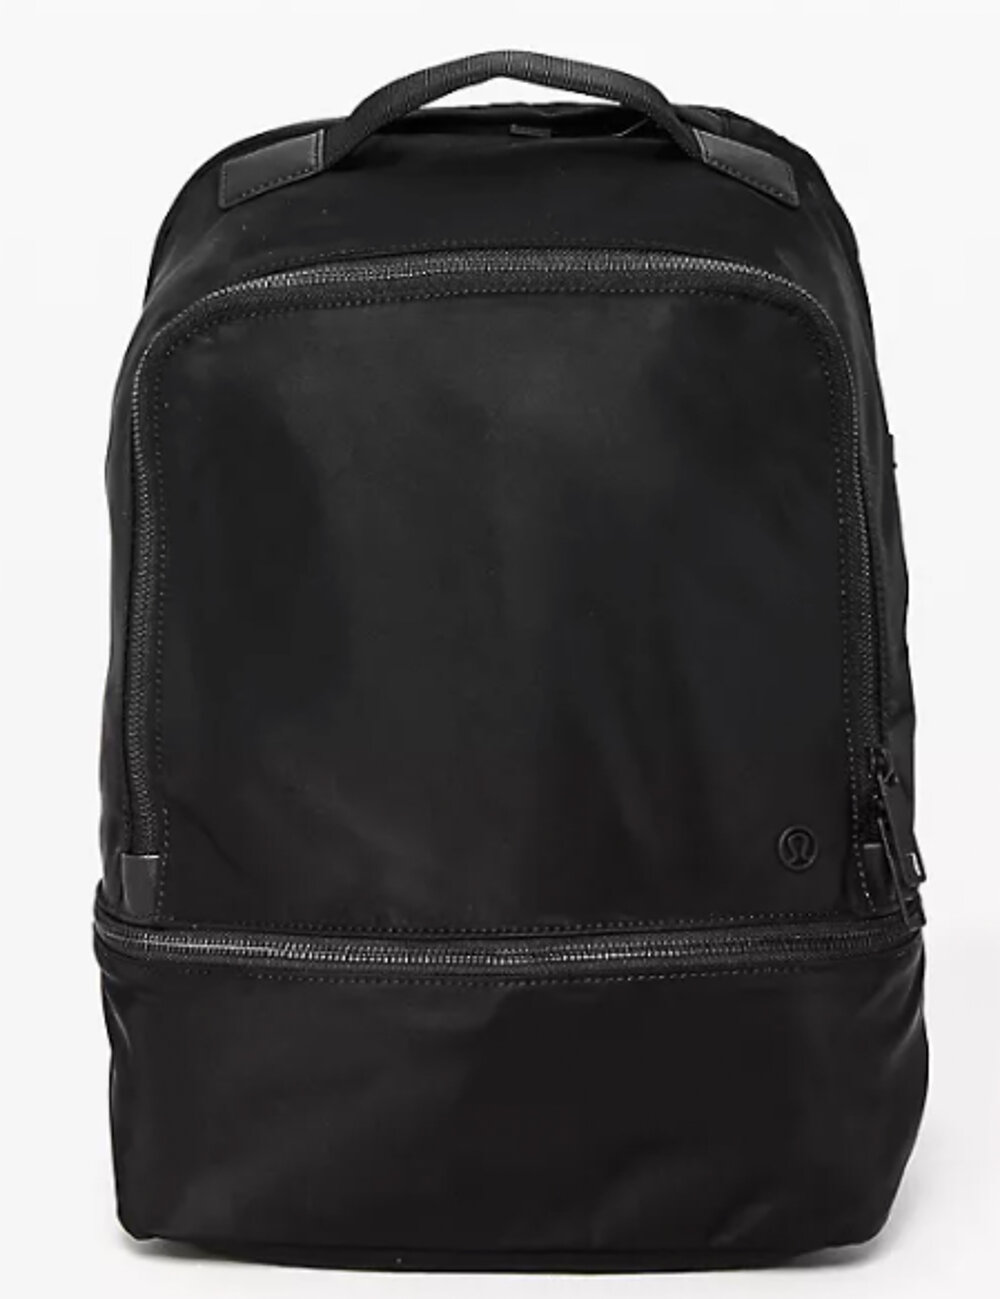 (3) Lululemon City Adventurer Backpack